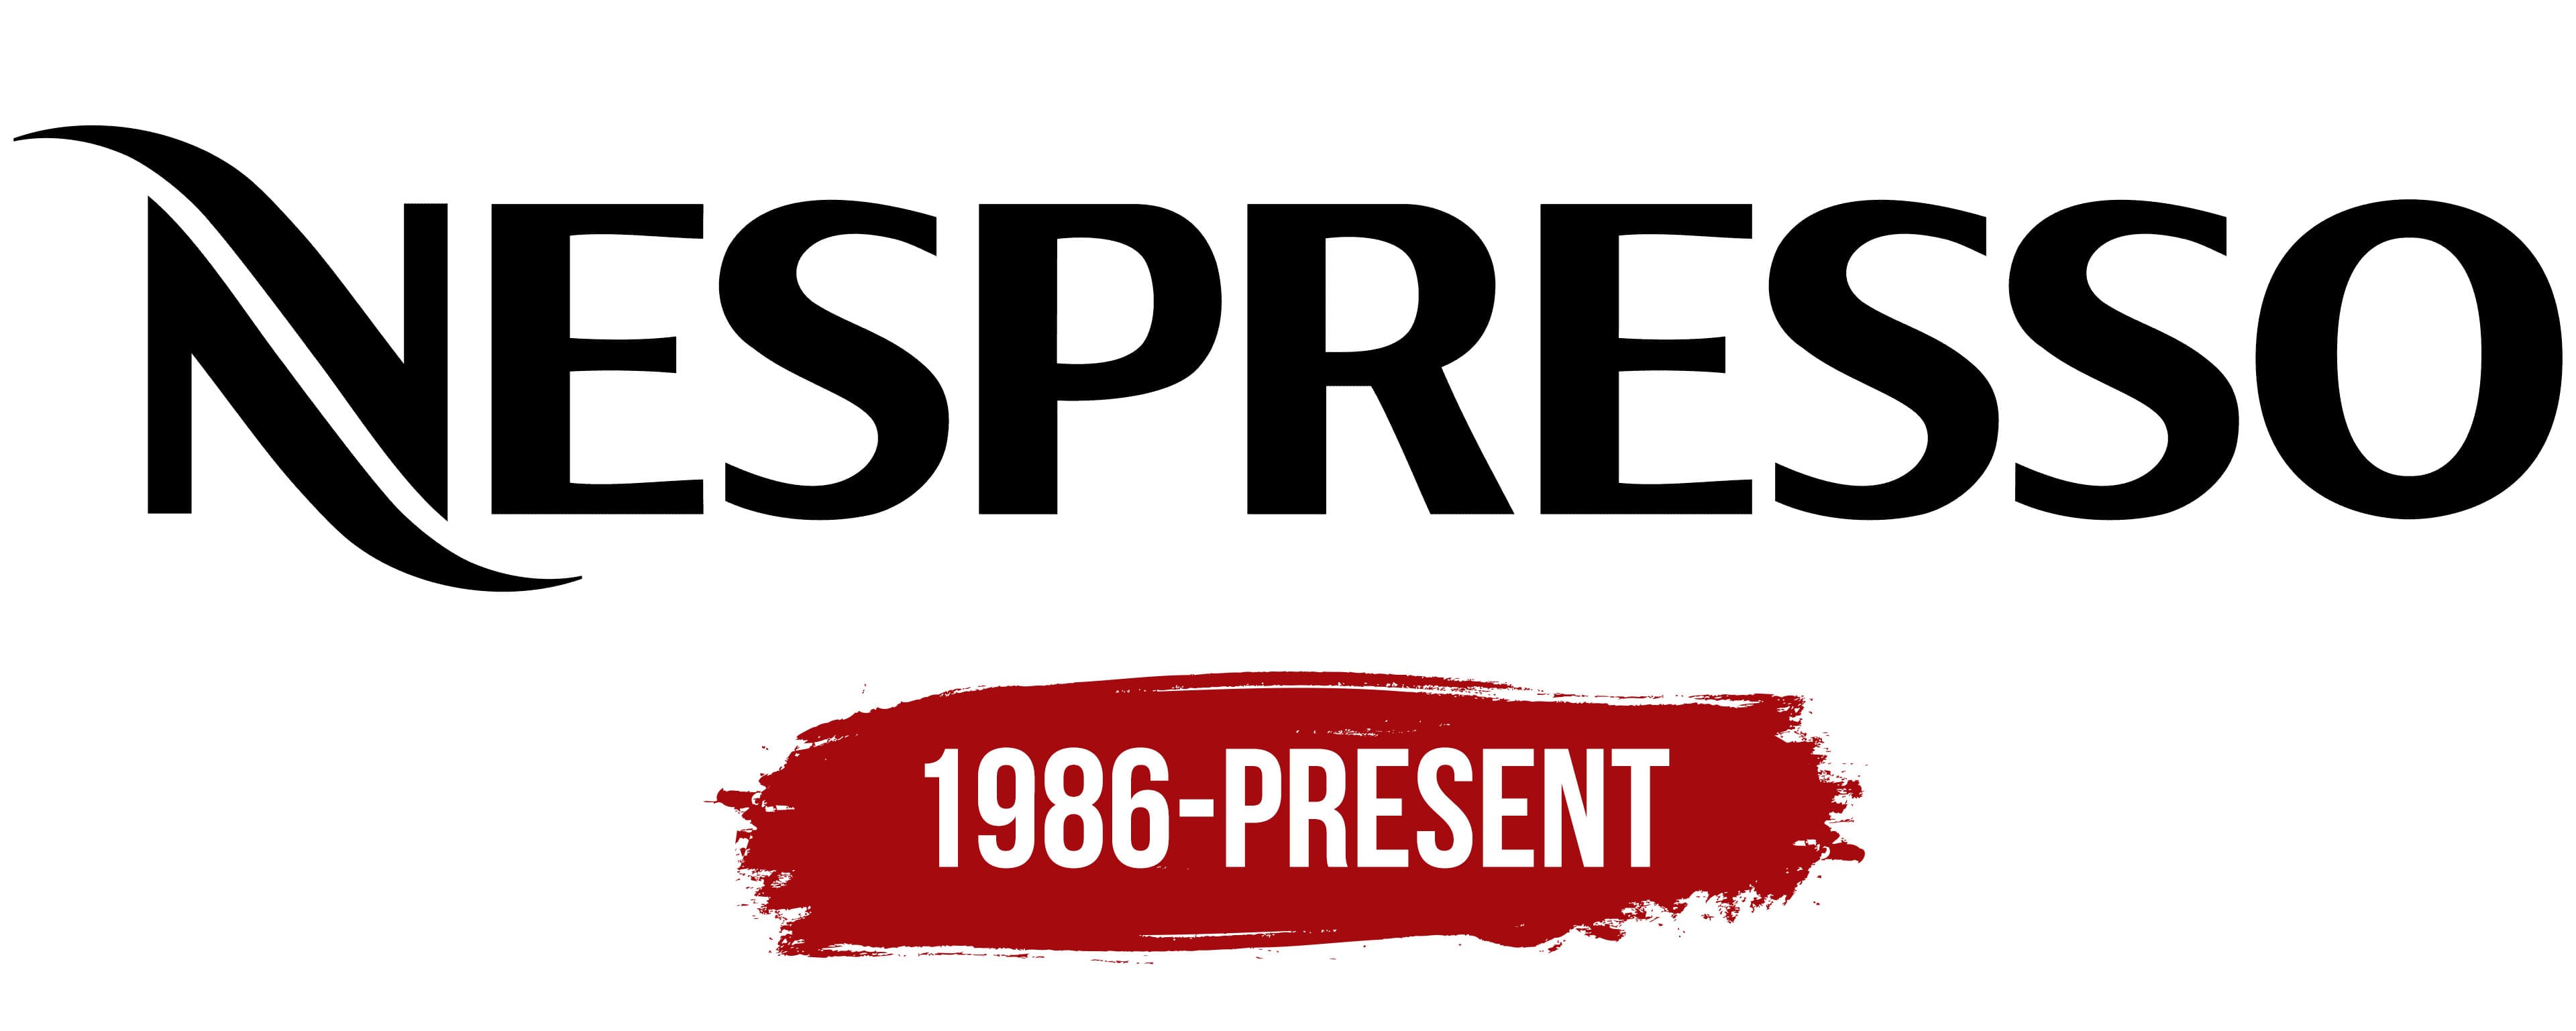 Que Cementerio compilar Nespresso Logo, symbol, meaning, history, PNG